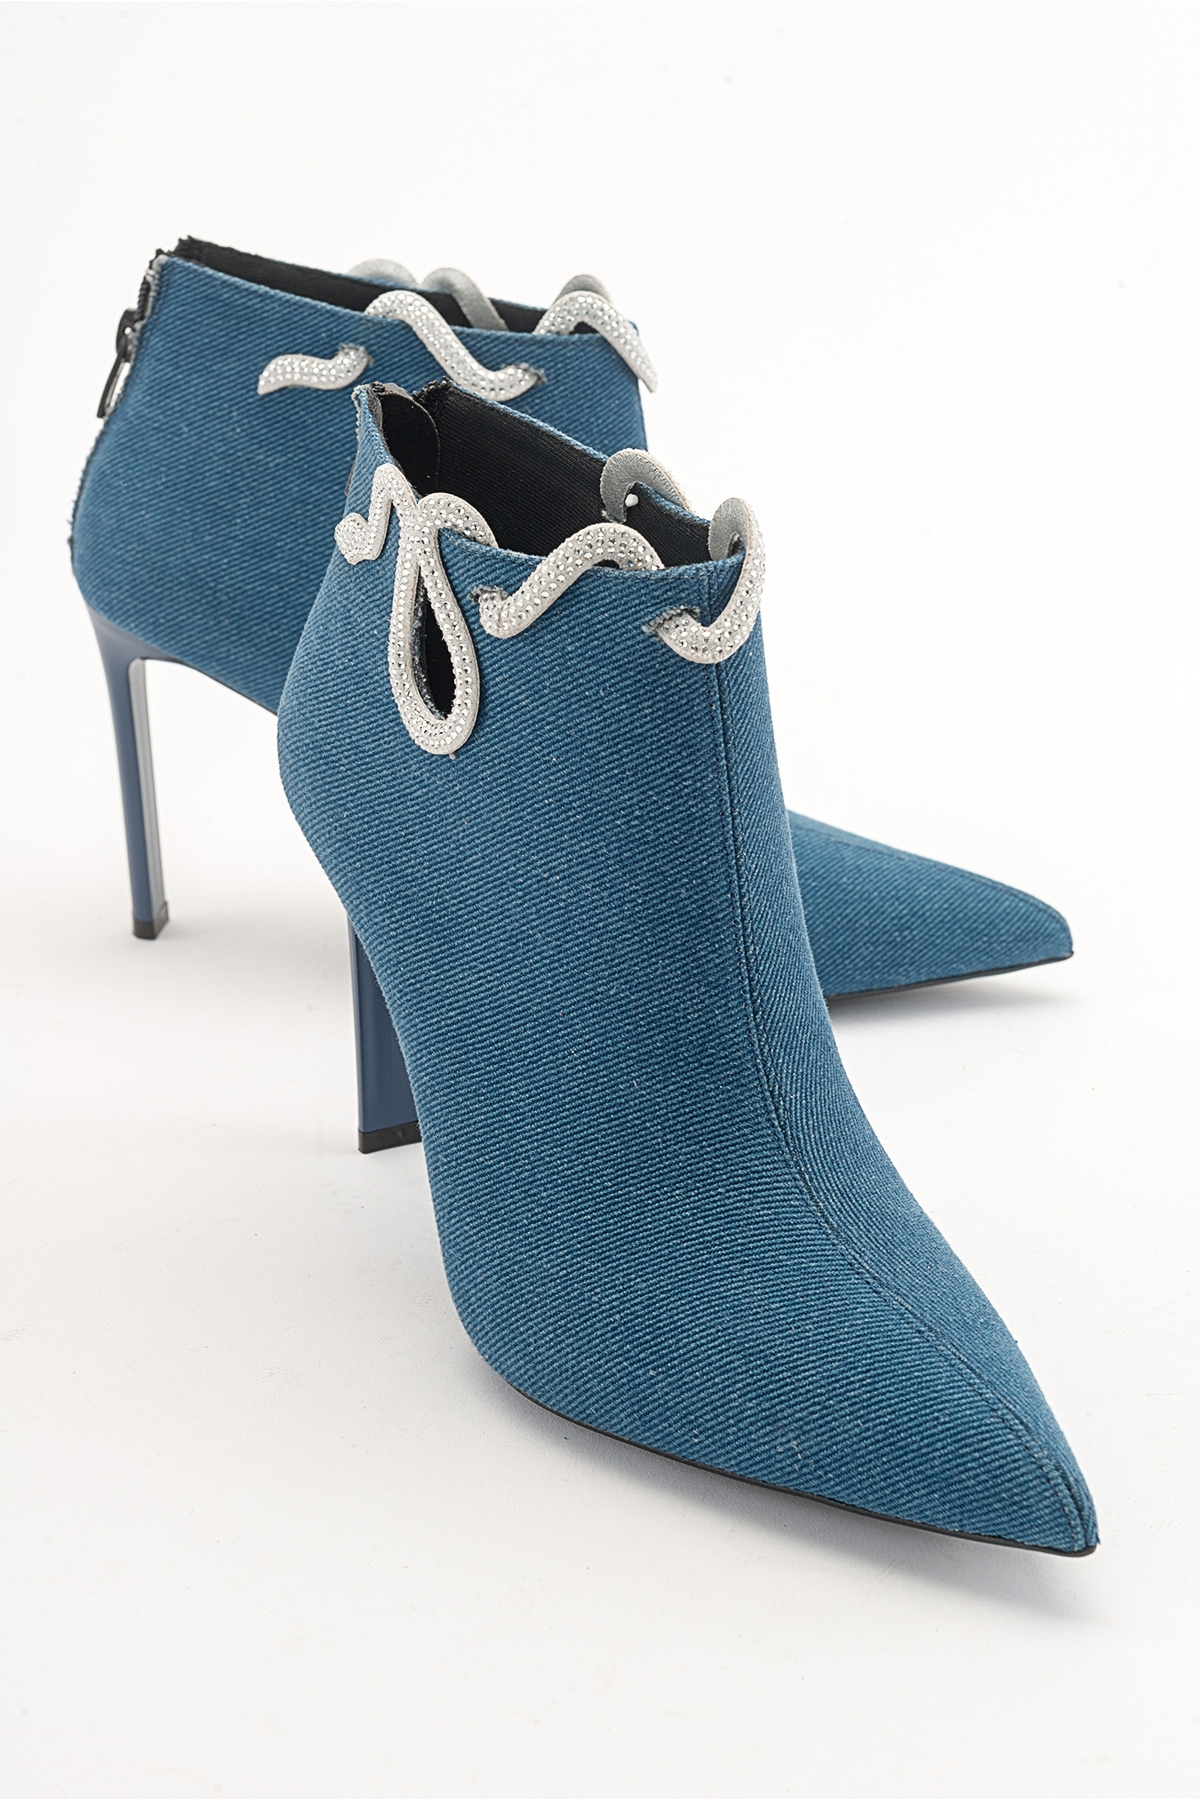 LuviShoes NAVAS Denim Blue Women's Heeled Boots